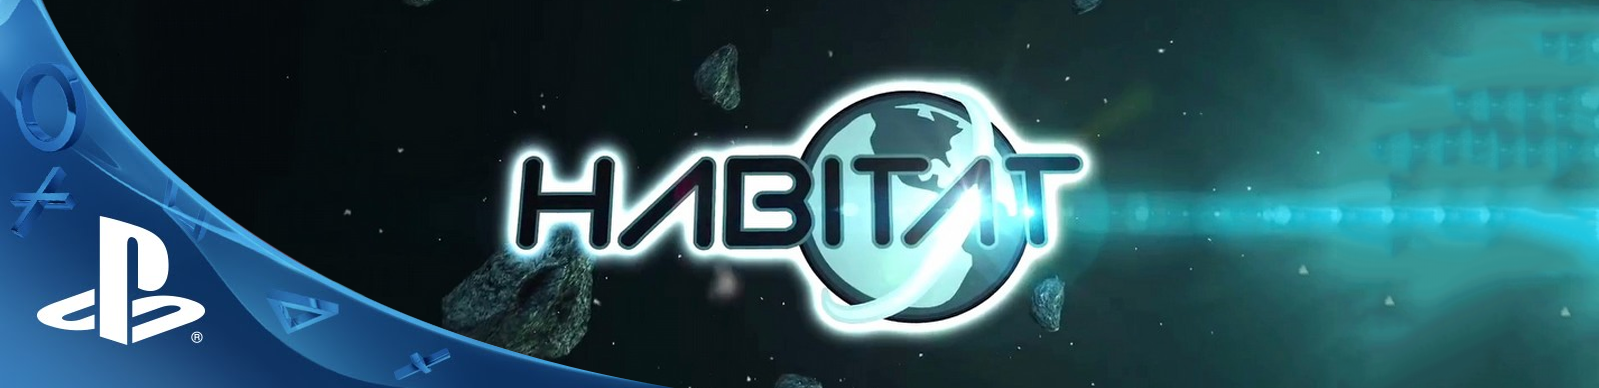 Habitat coming to Sony PlayStation®4